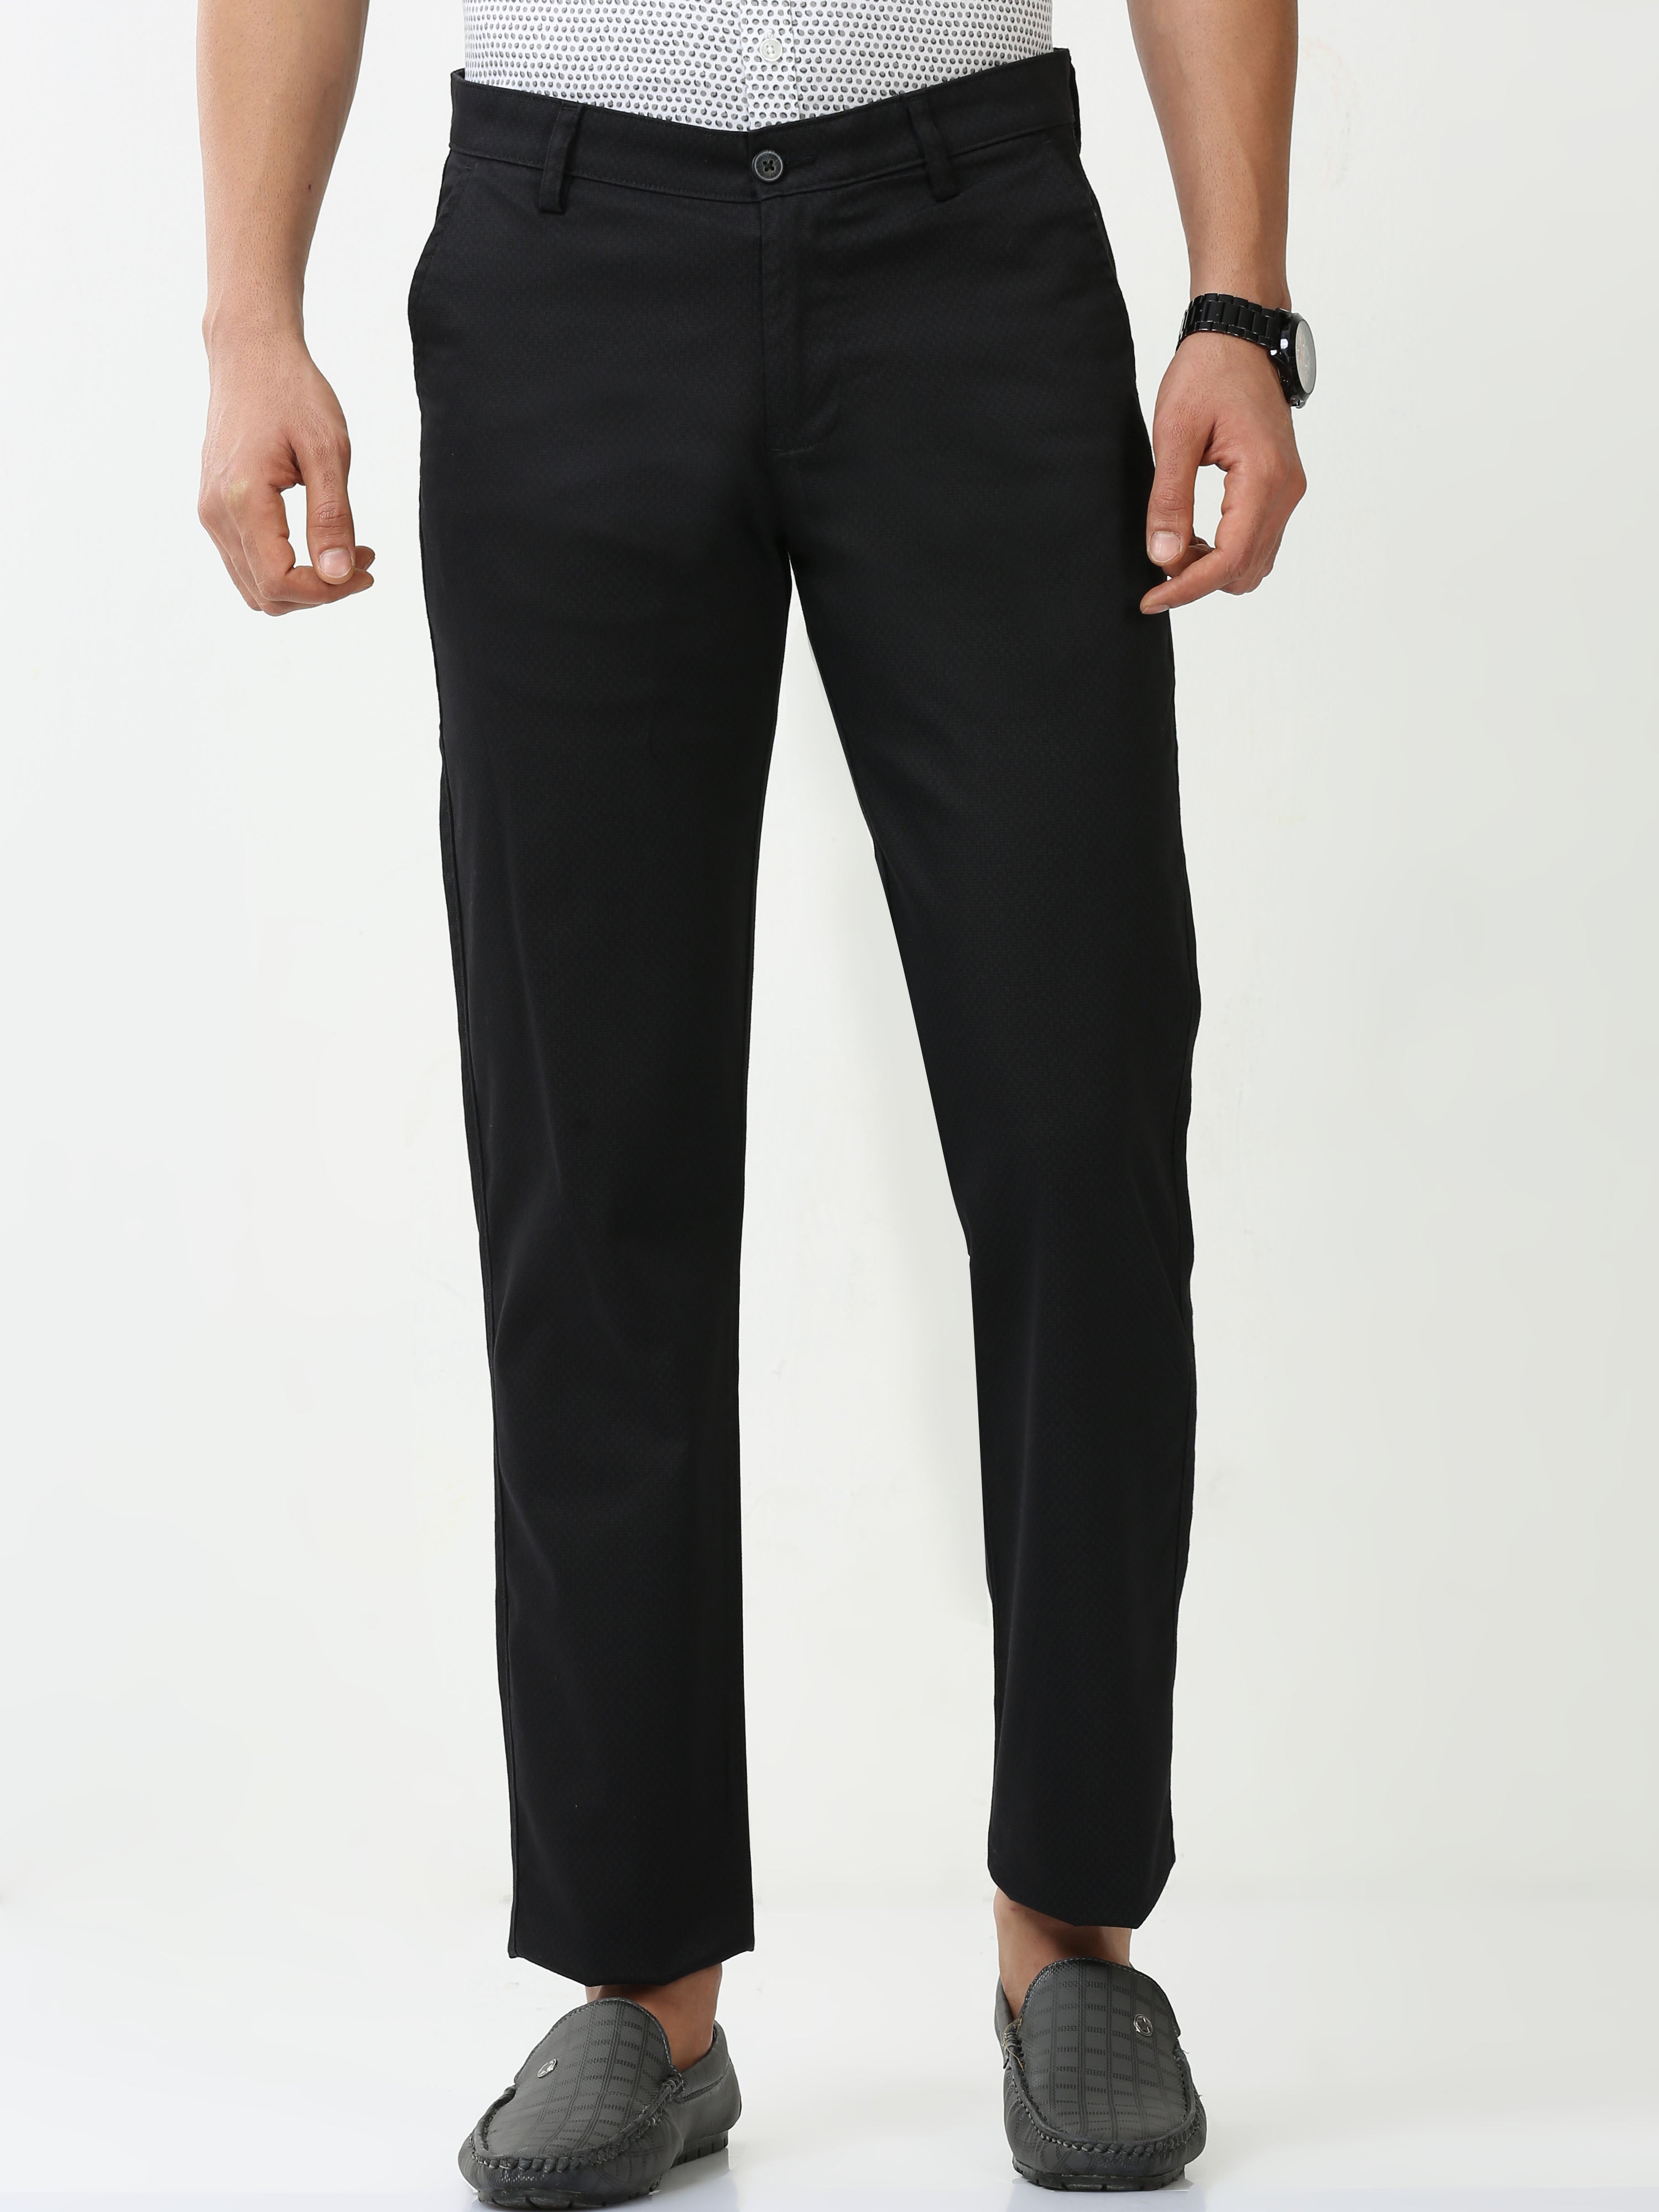 Polo Ralph Lauren Men's Stretch Straight Fit Navy Dress Pants [34x34] | eBay